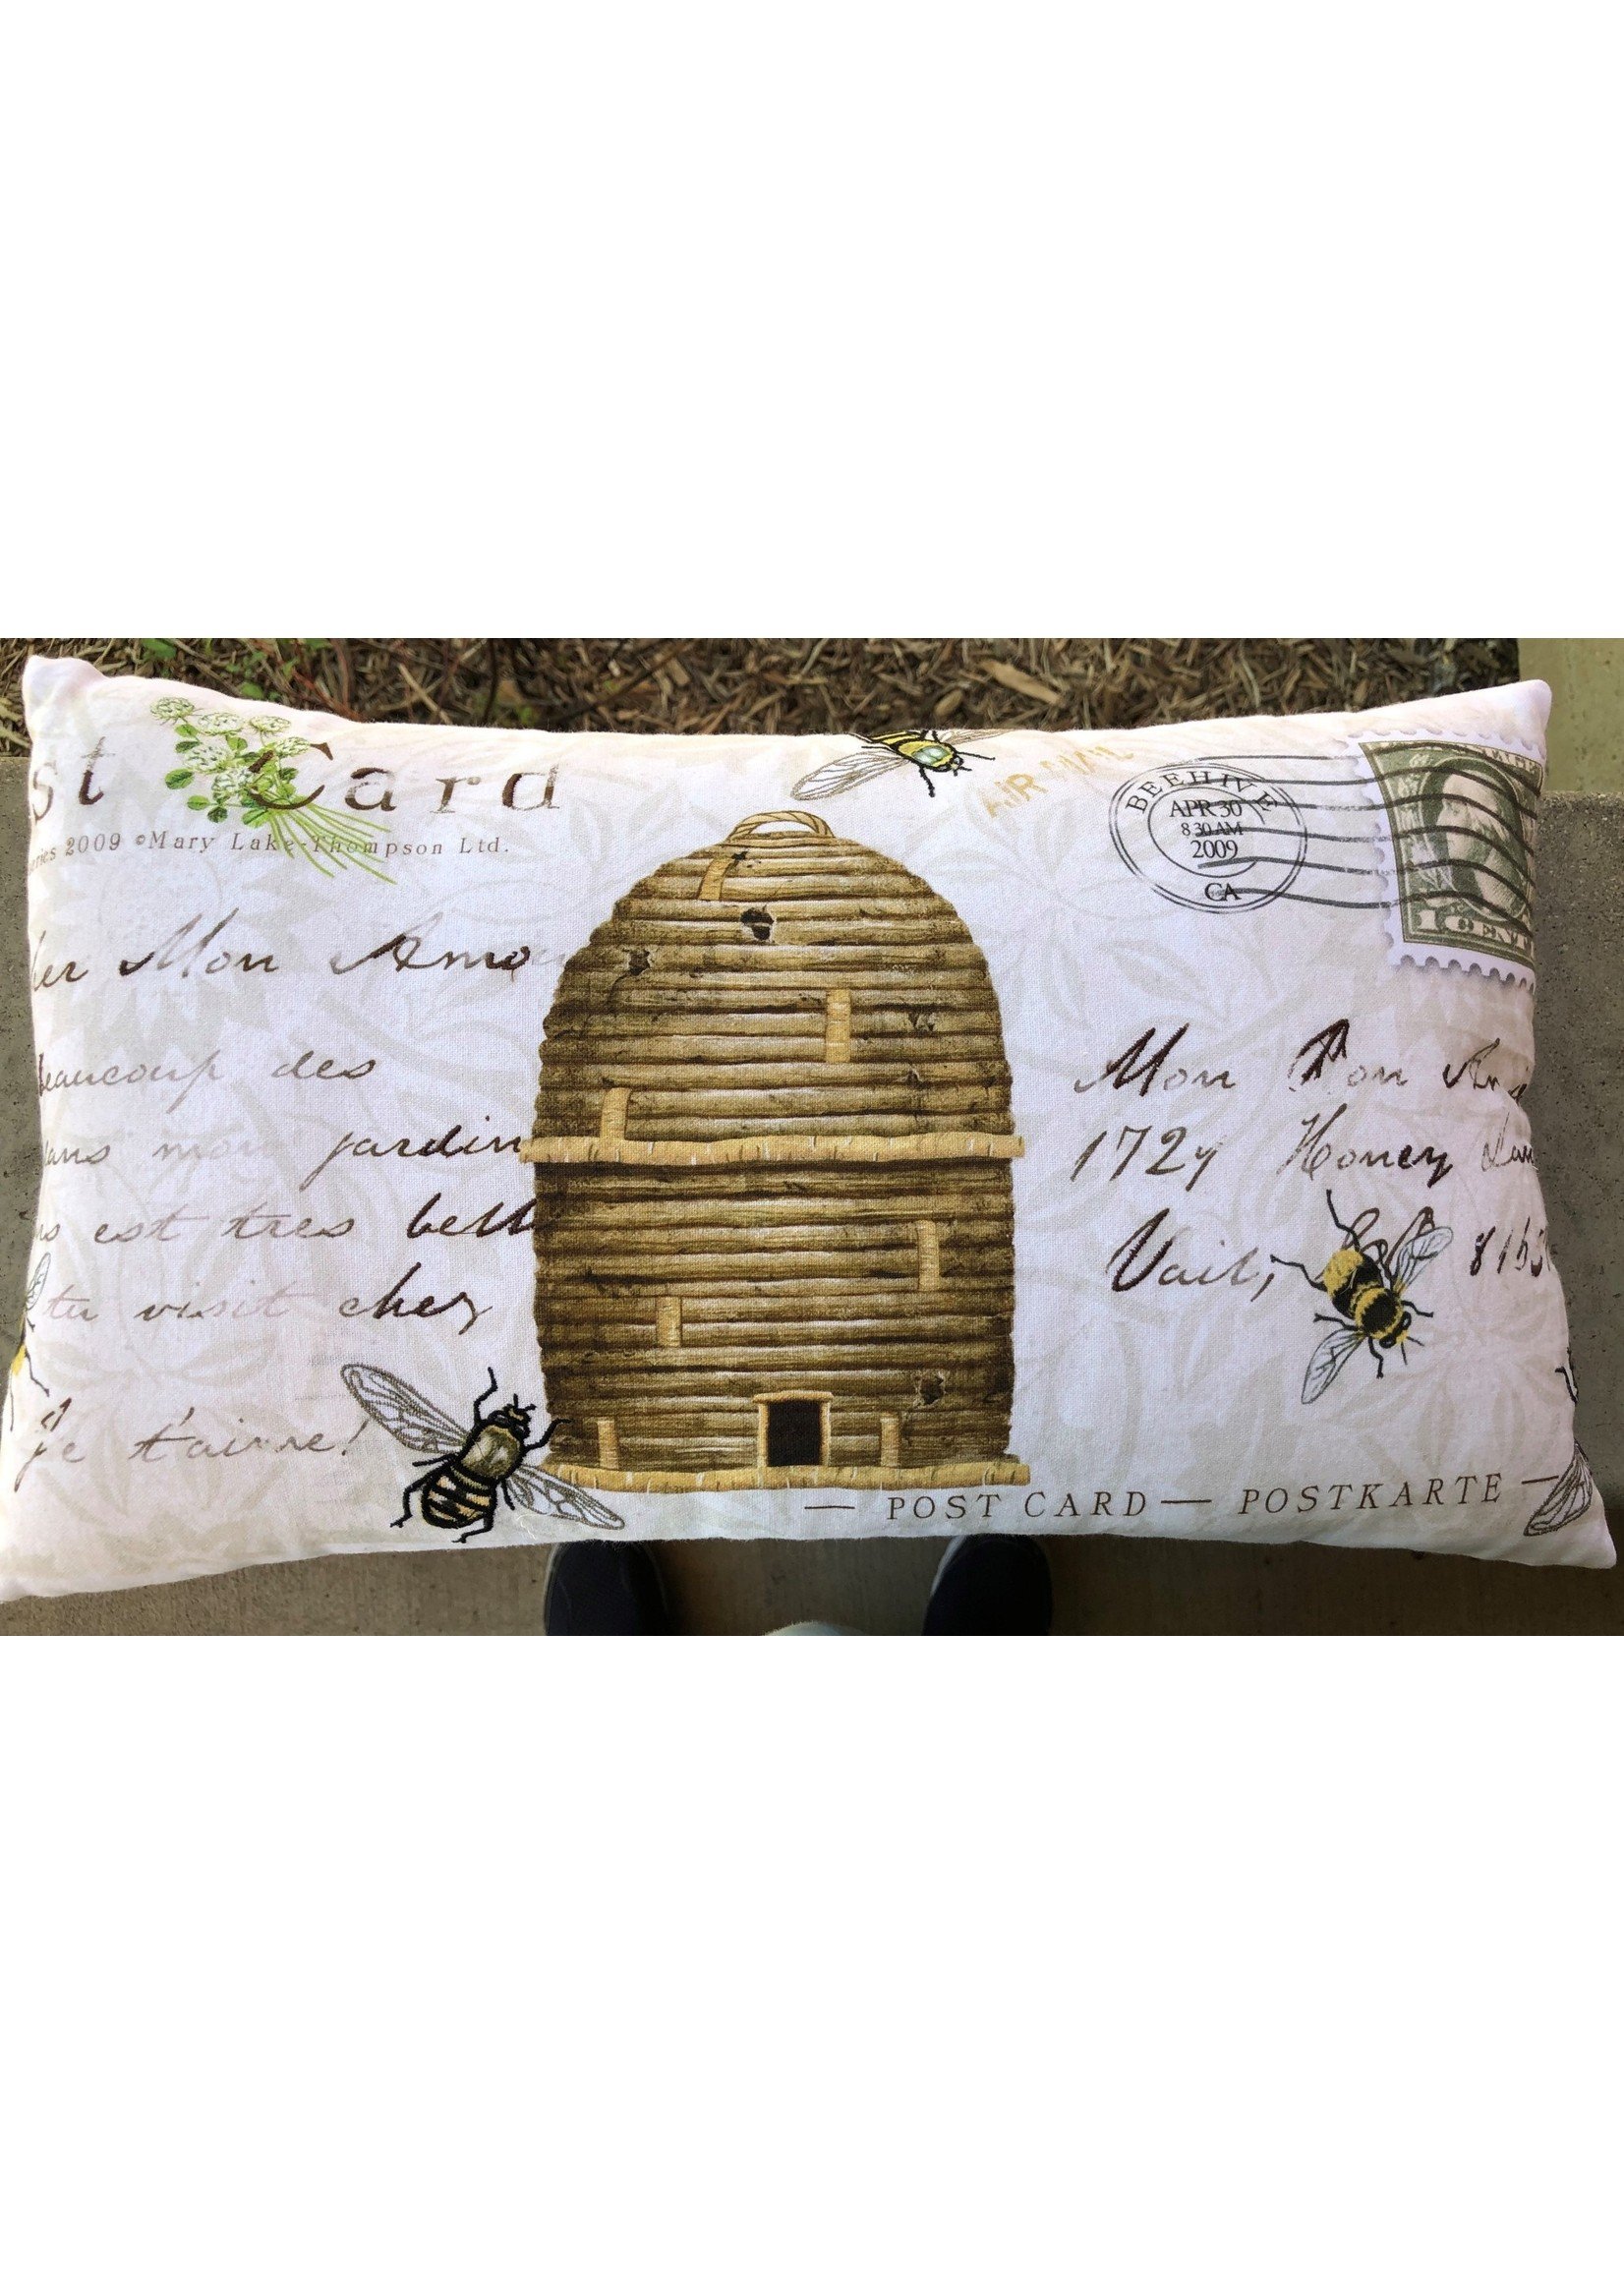 Beehive Pillow